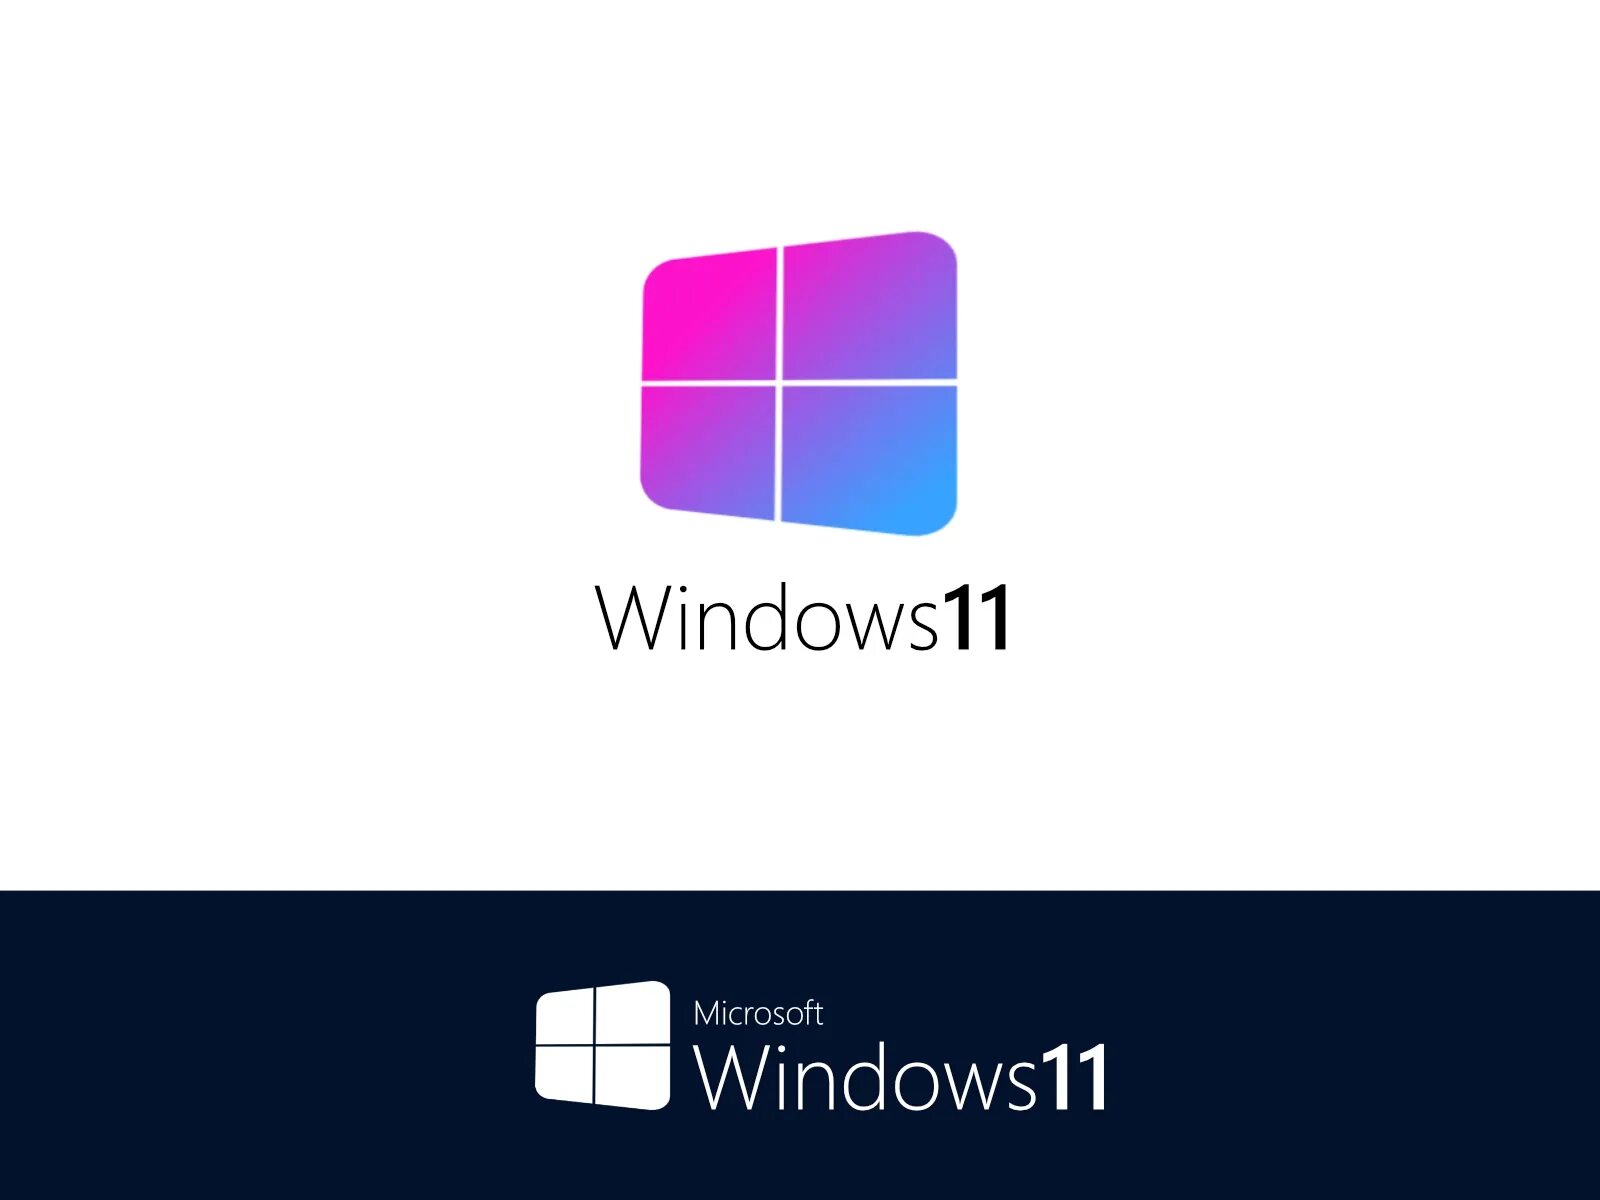 Windows 11 s. Windows 11 logo. Значок Windows 11. Виндовс 11 концепт. Обои виндовс 11.